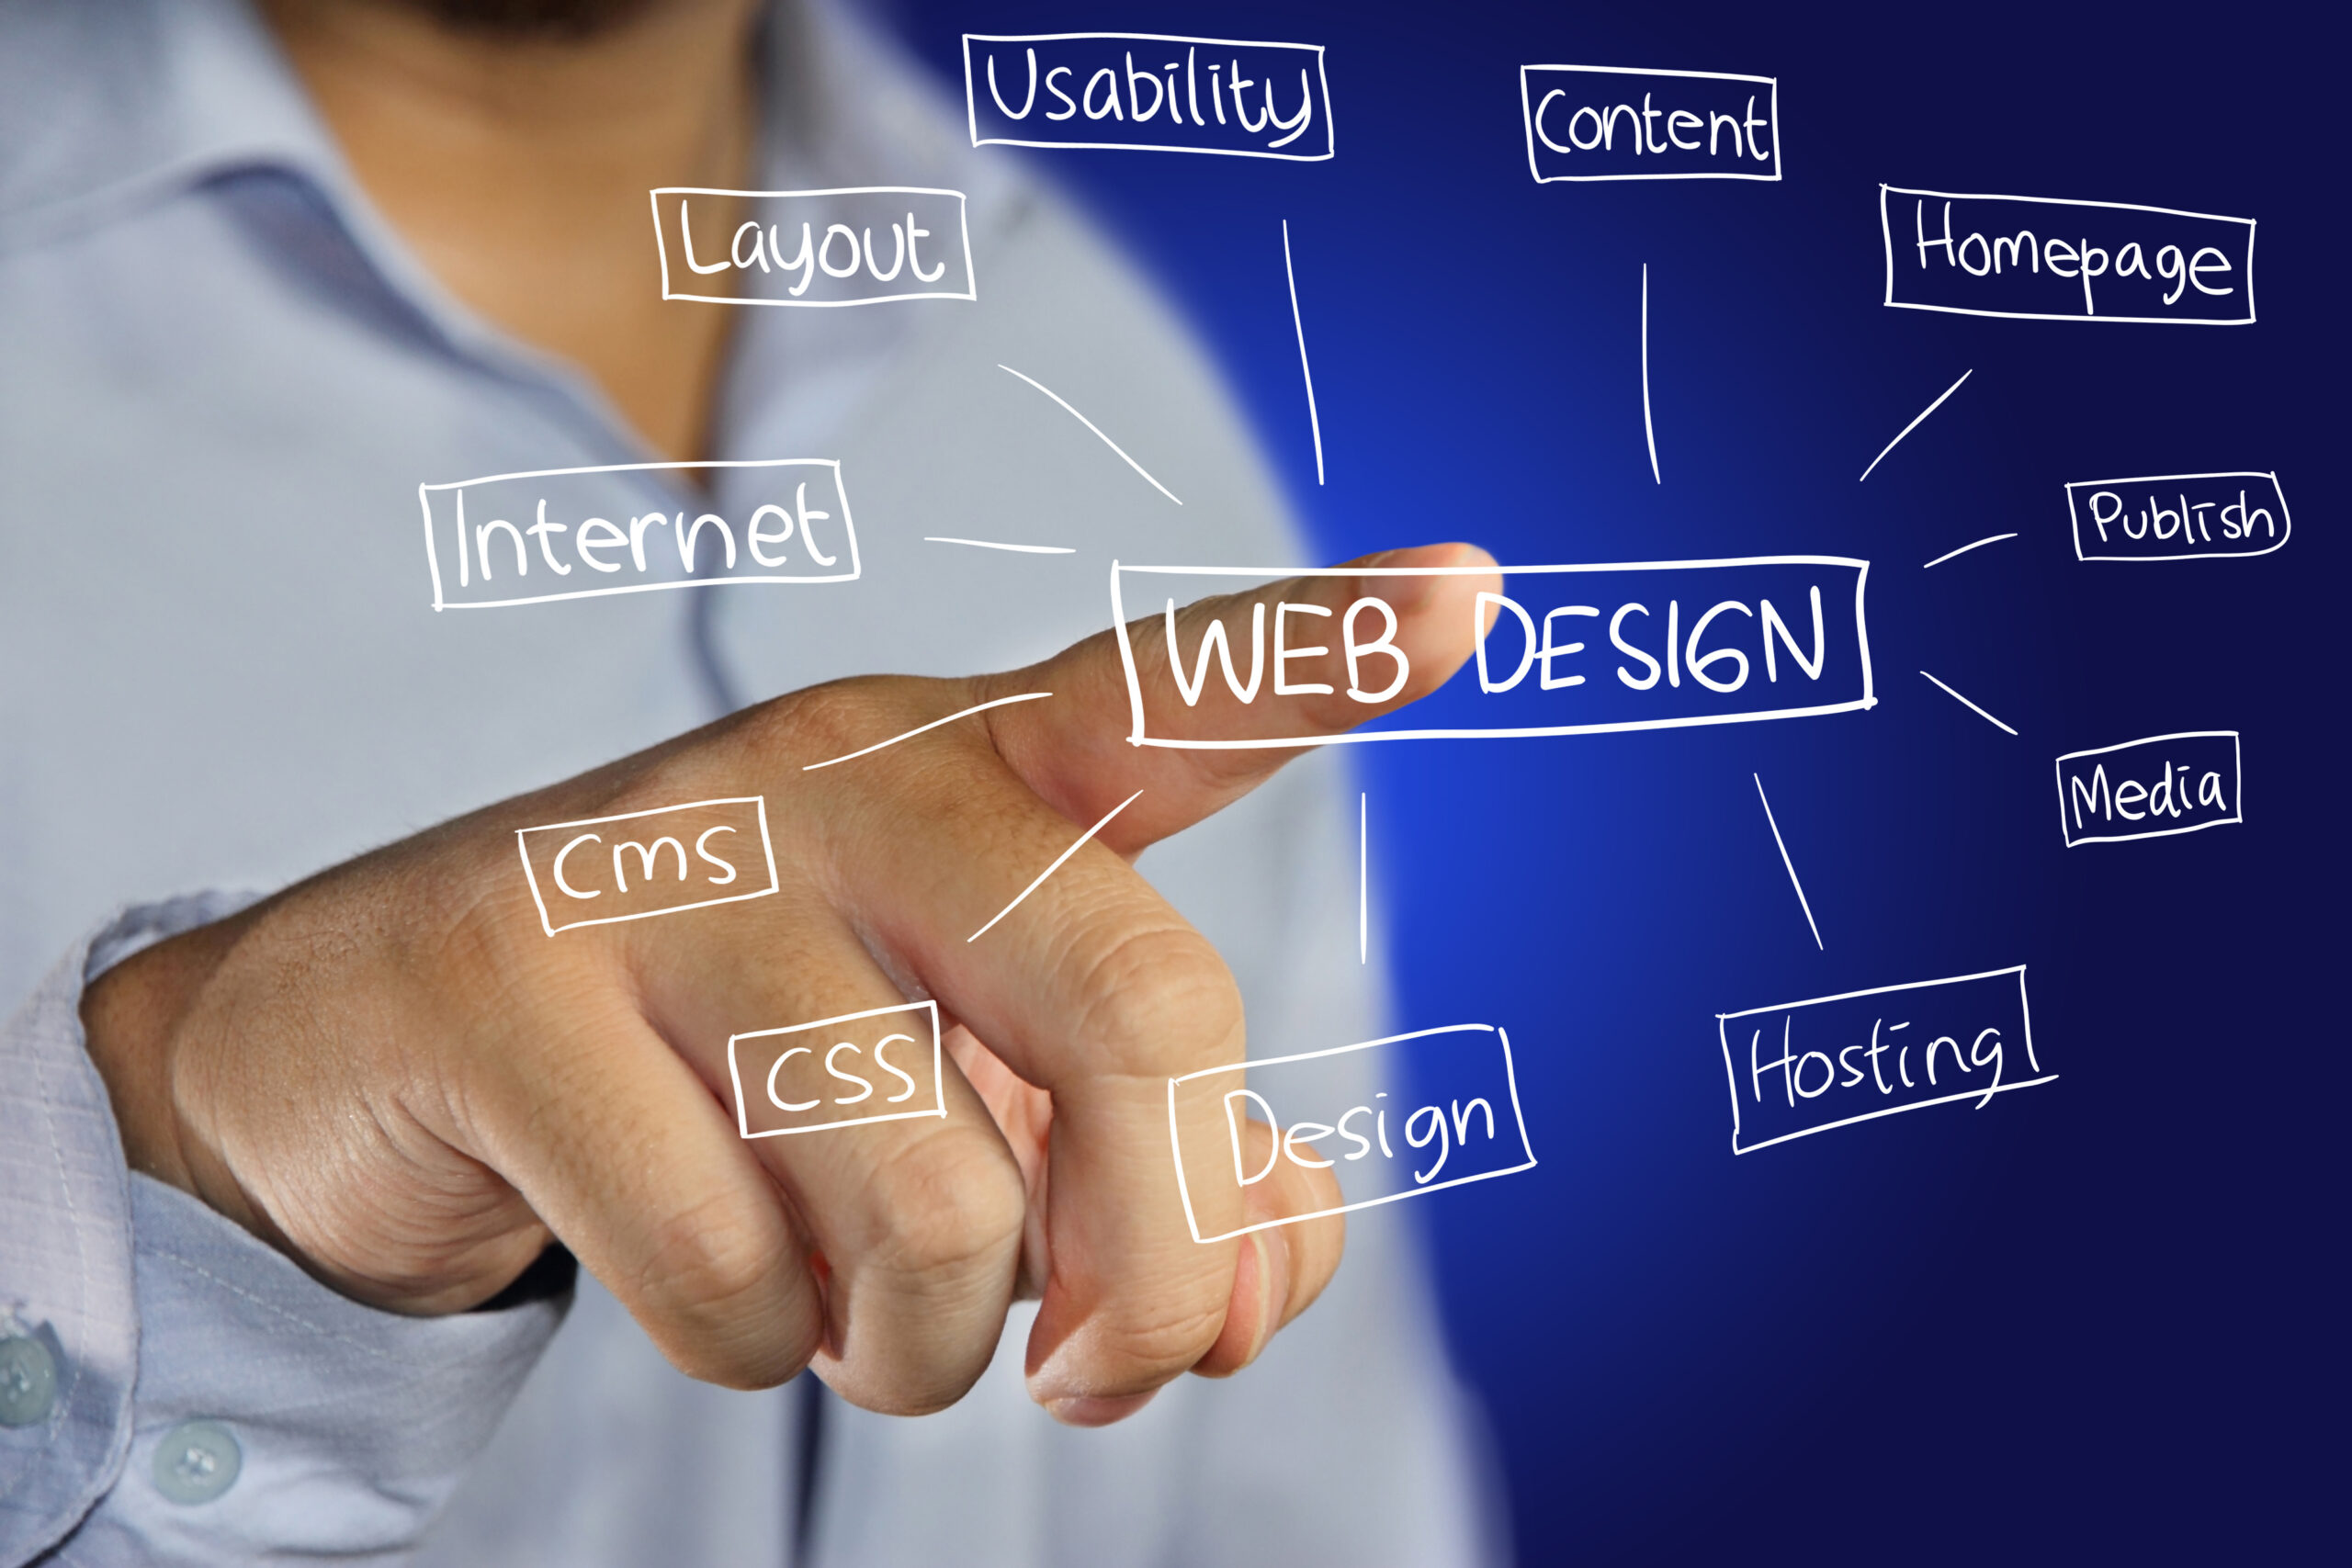 Web Design Concept